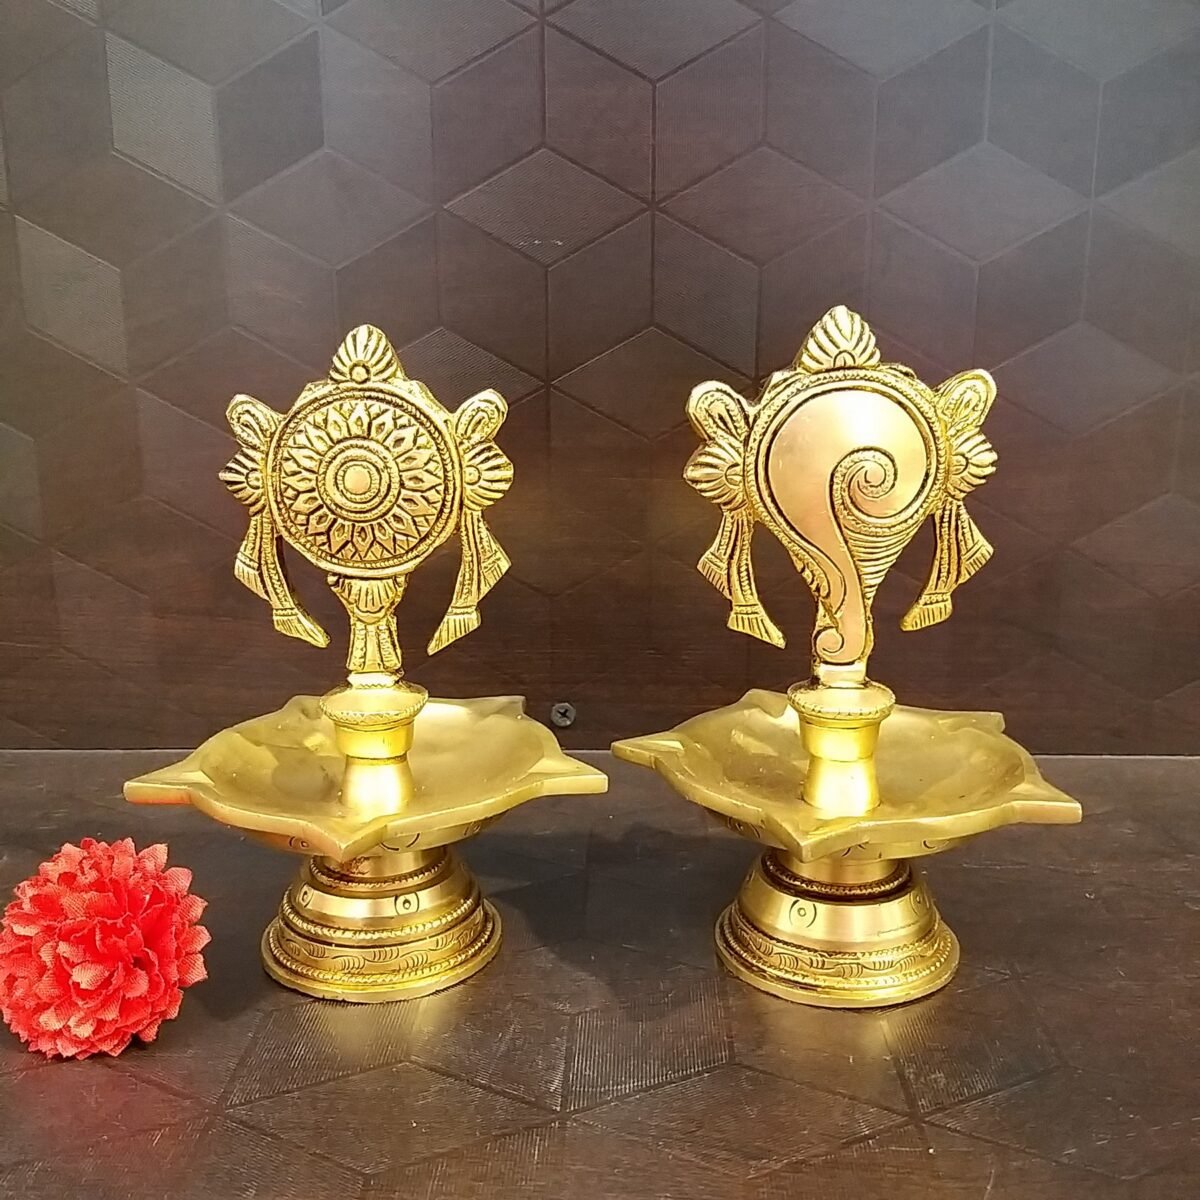 brass sangu chakkara diya pair idols pooja items home decor gift buy online india 10117